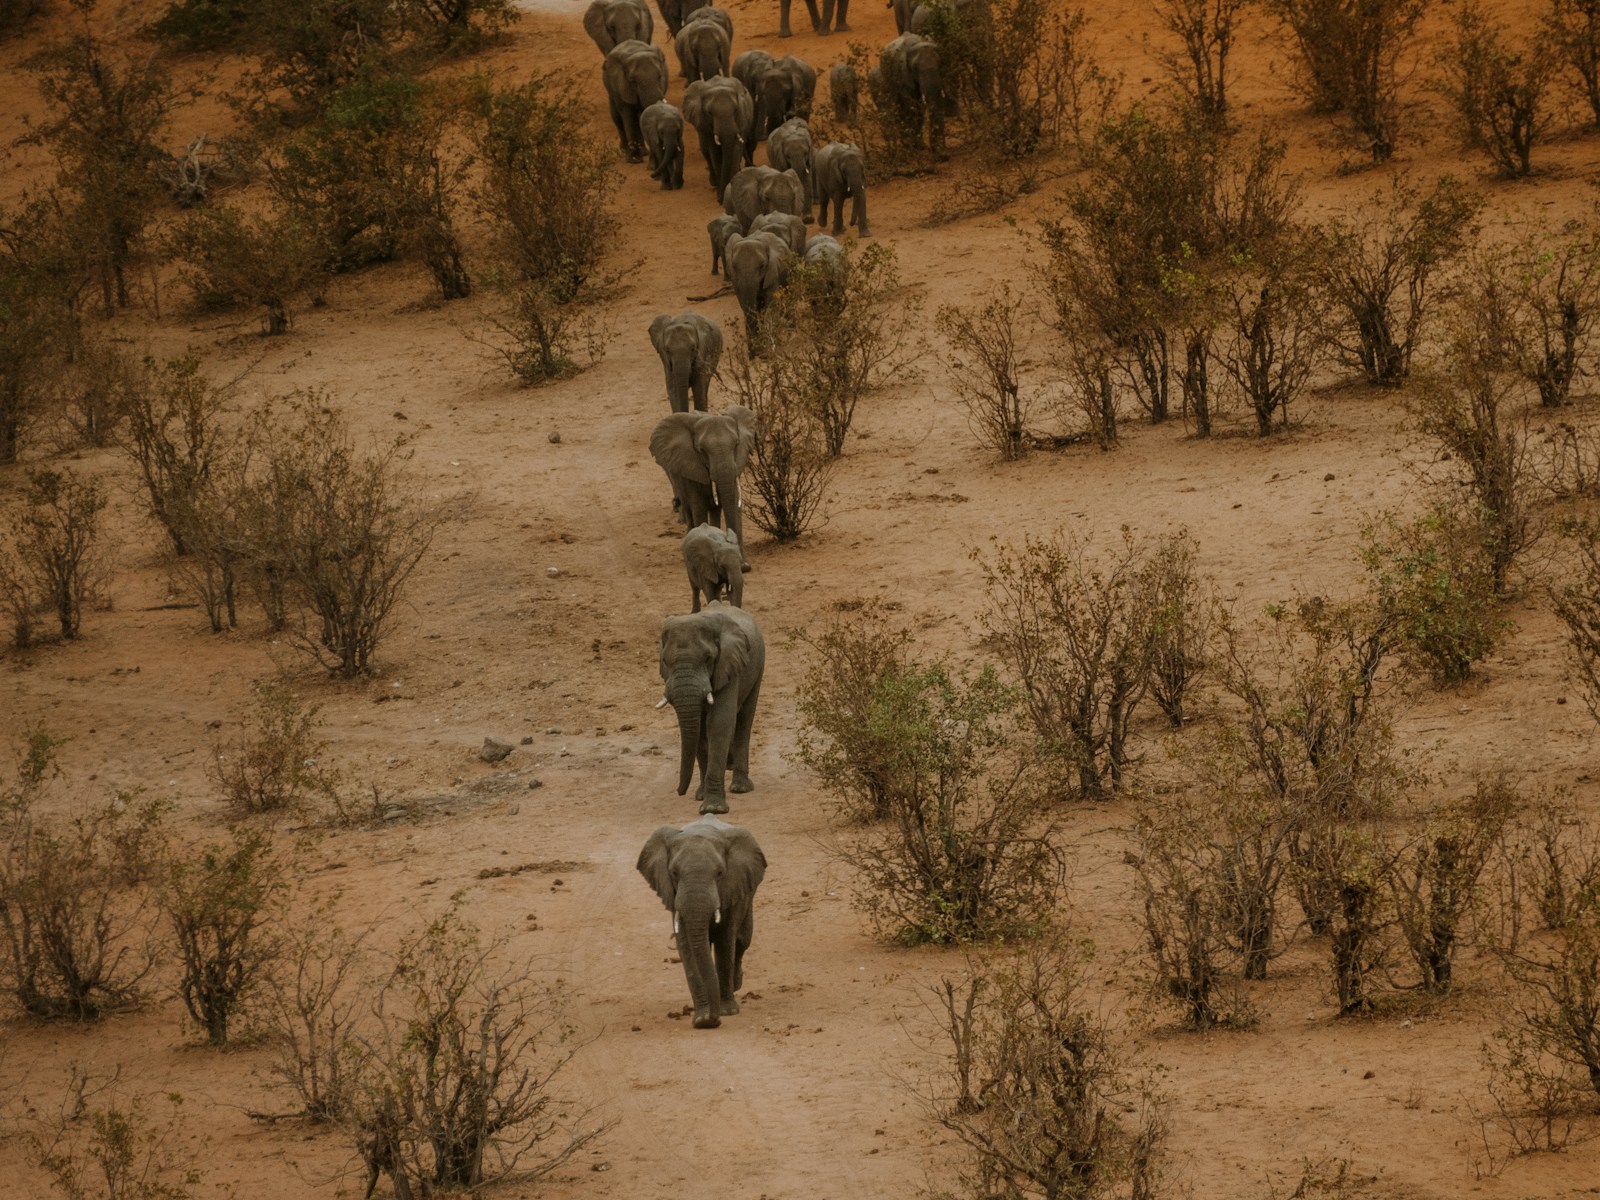 Safari Zimbabwe : A la rencontre de la faune sauvage africaine